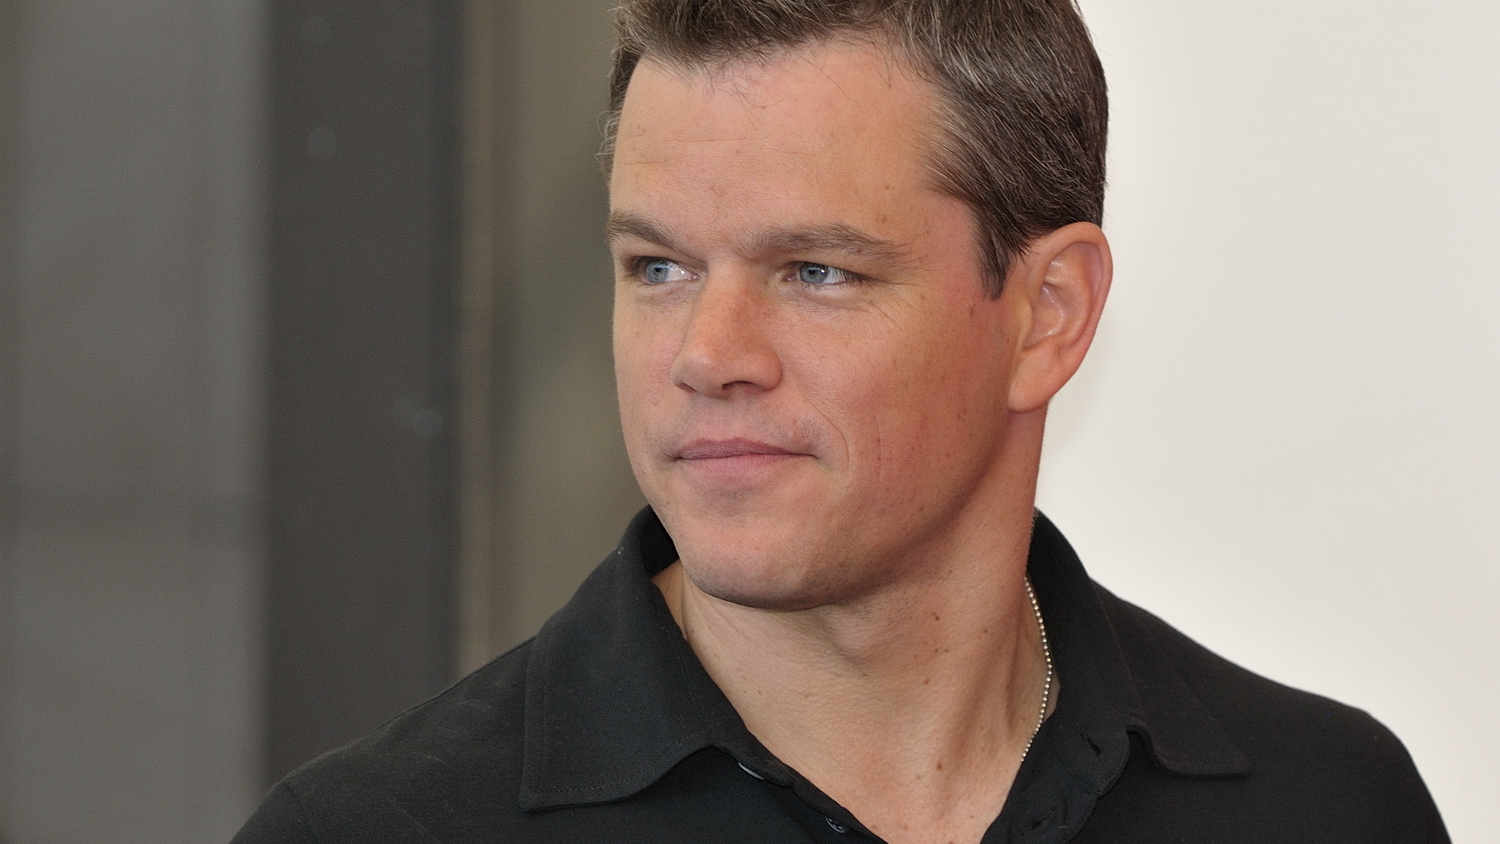 Drie nieuwe castleden naast Matt Damon in 'Downsizing'